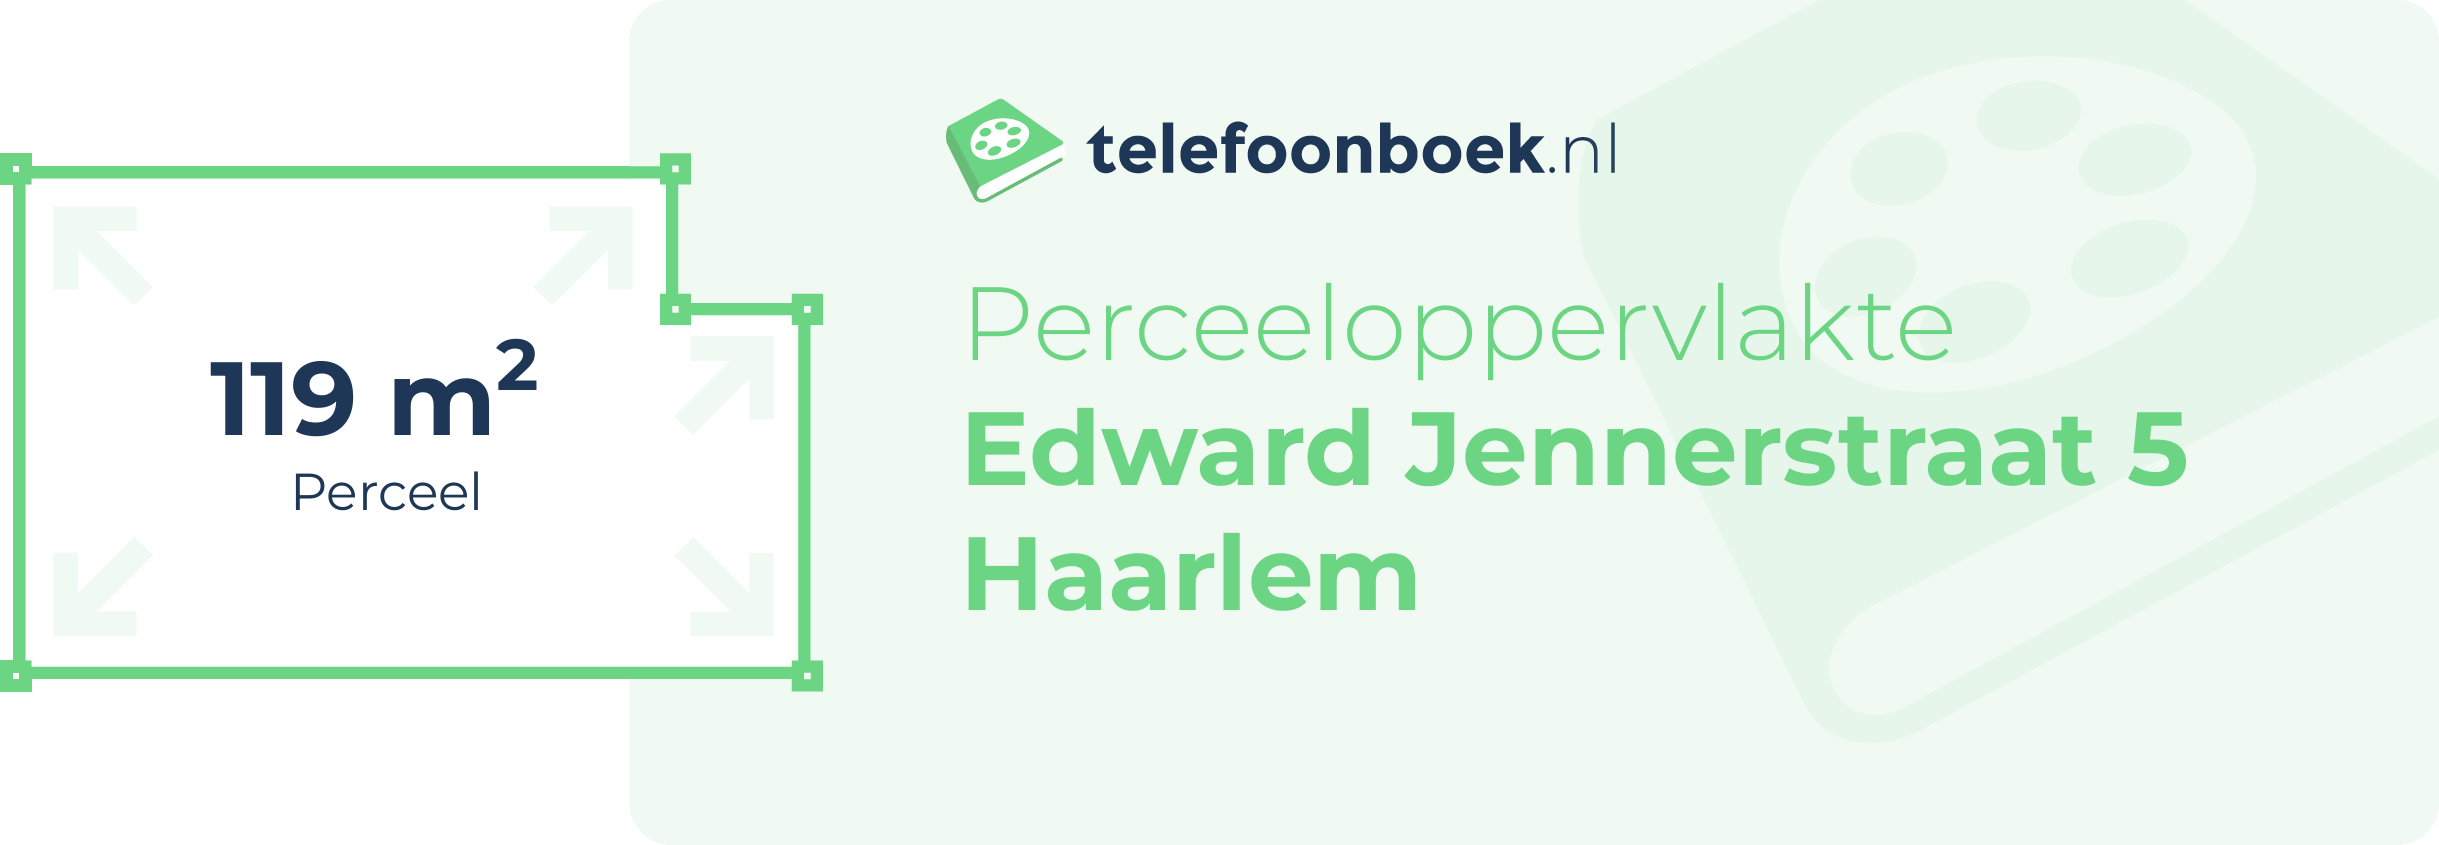 Perceeloppervlakte Edward Jennerstraat 5 Haarlem